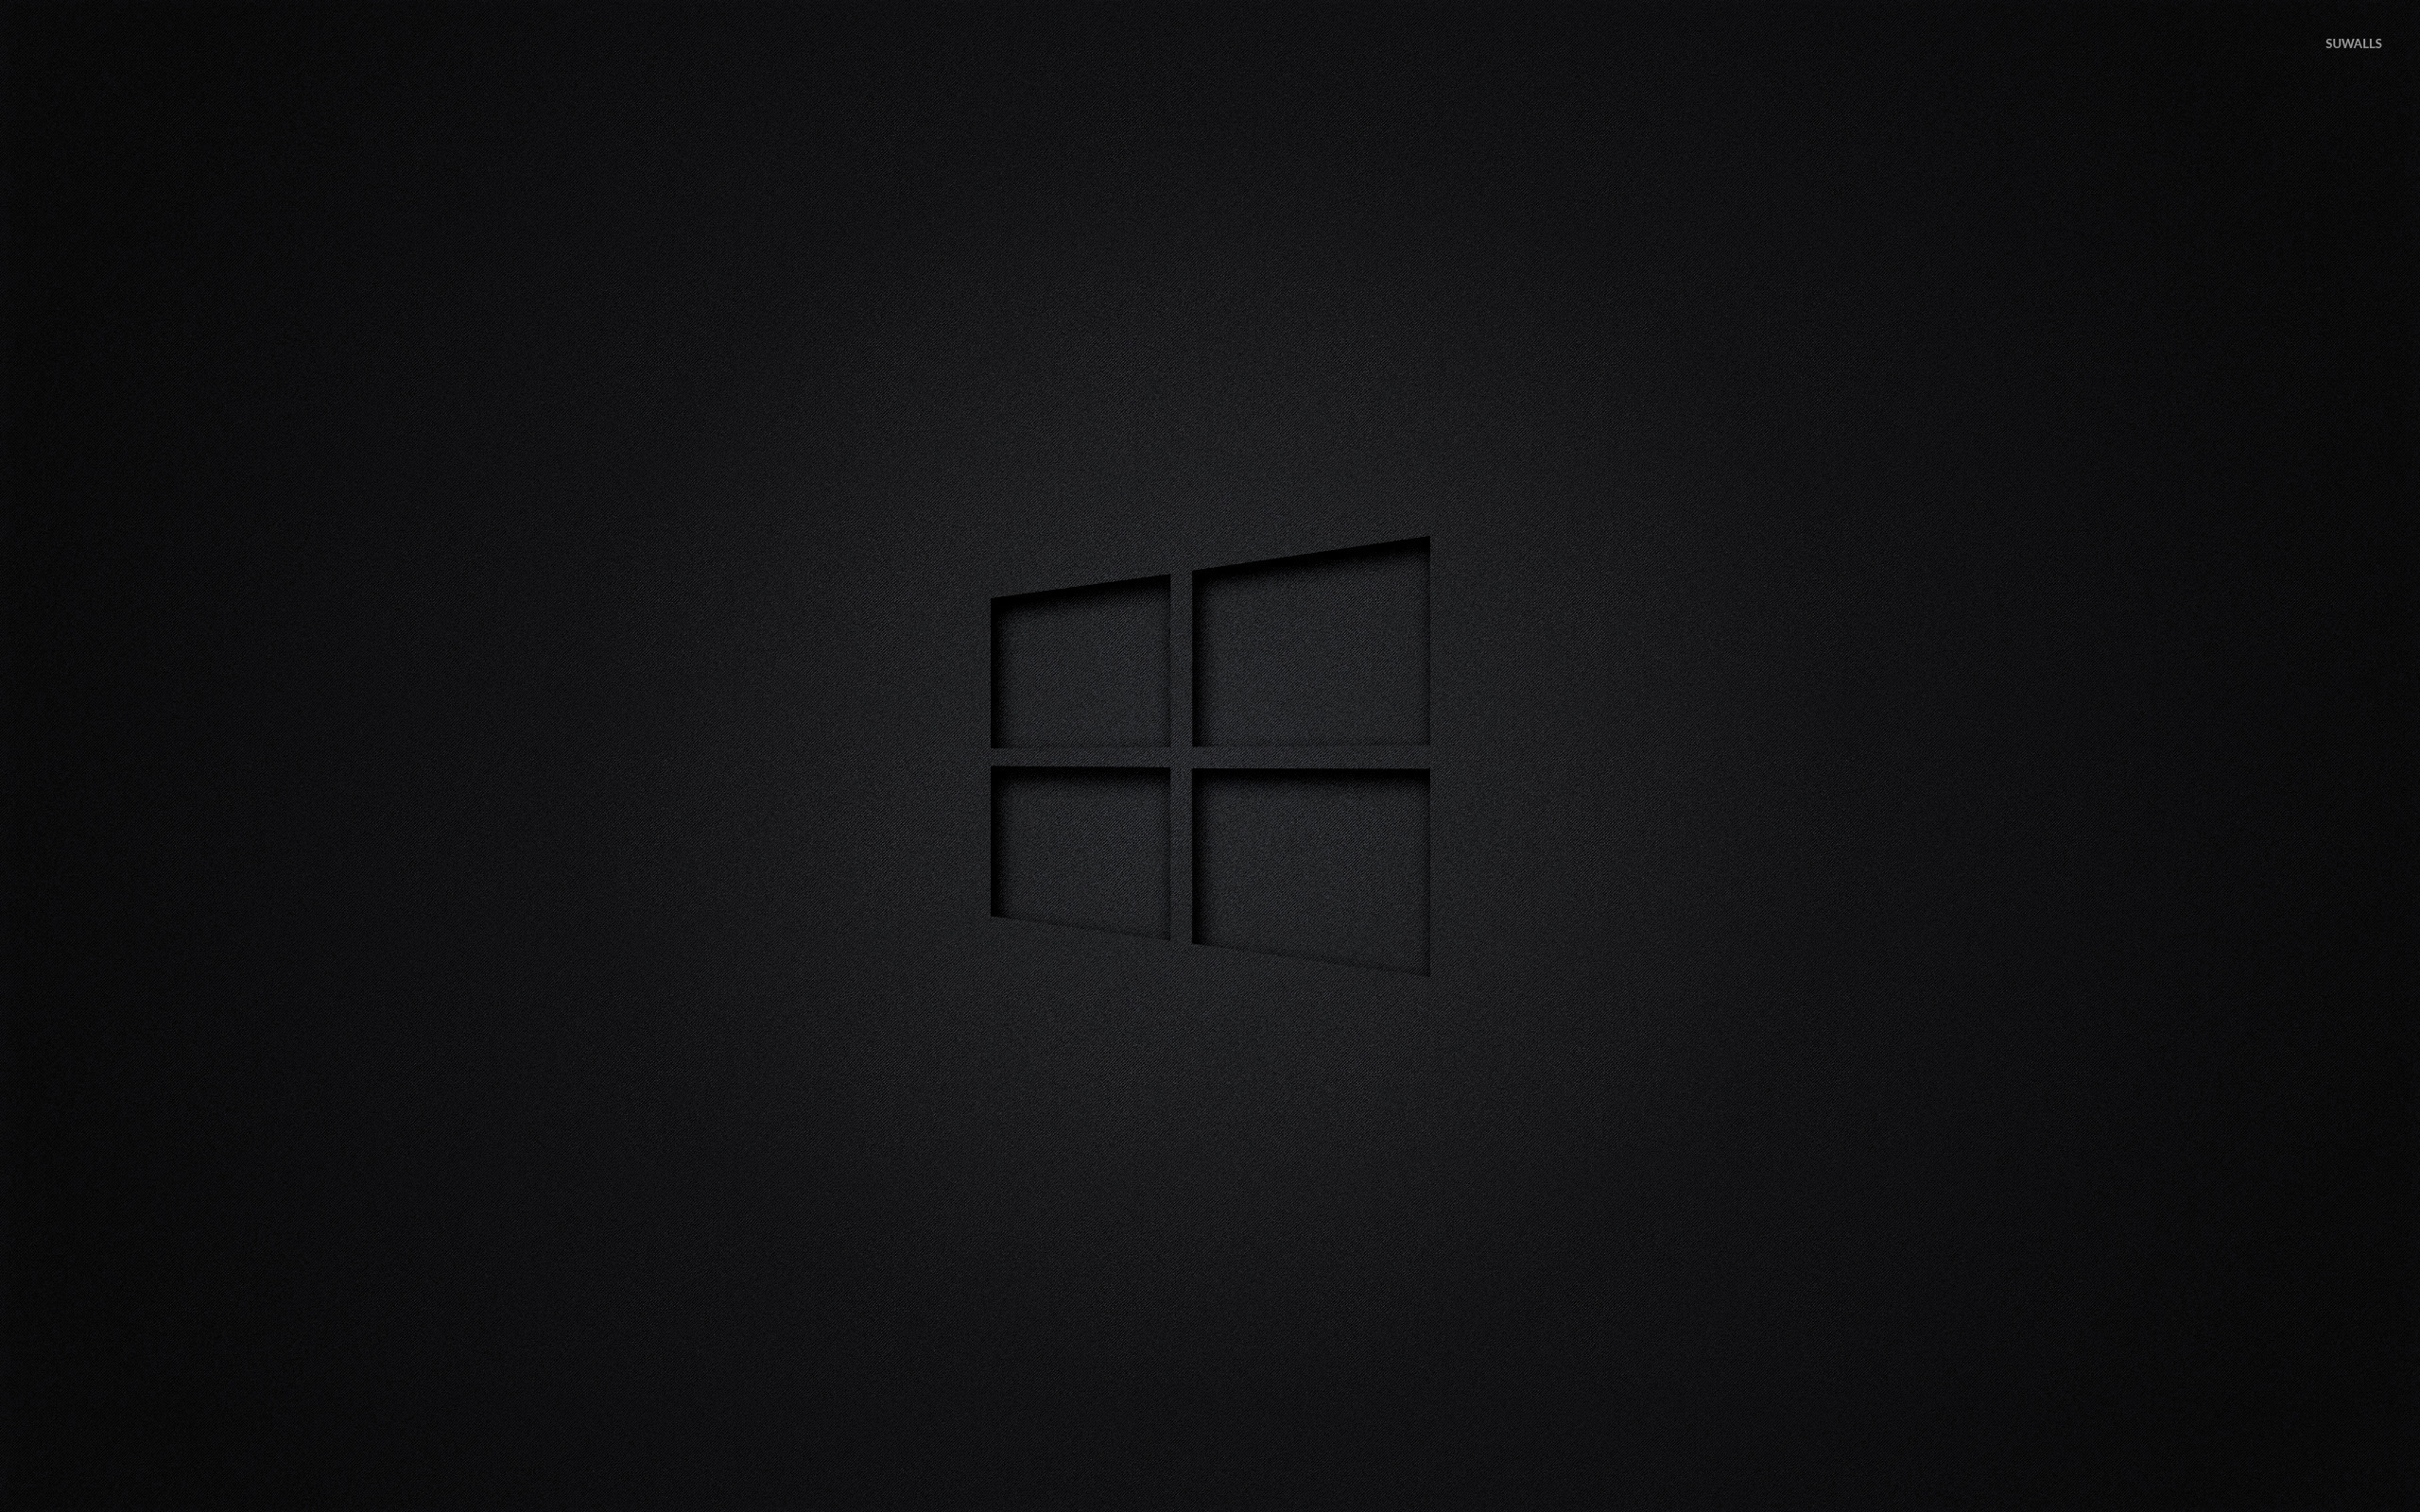 Windows 10 transparent logo on black wallpaper   Computer wallpapers